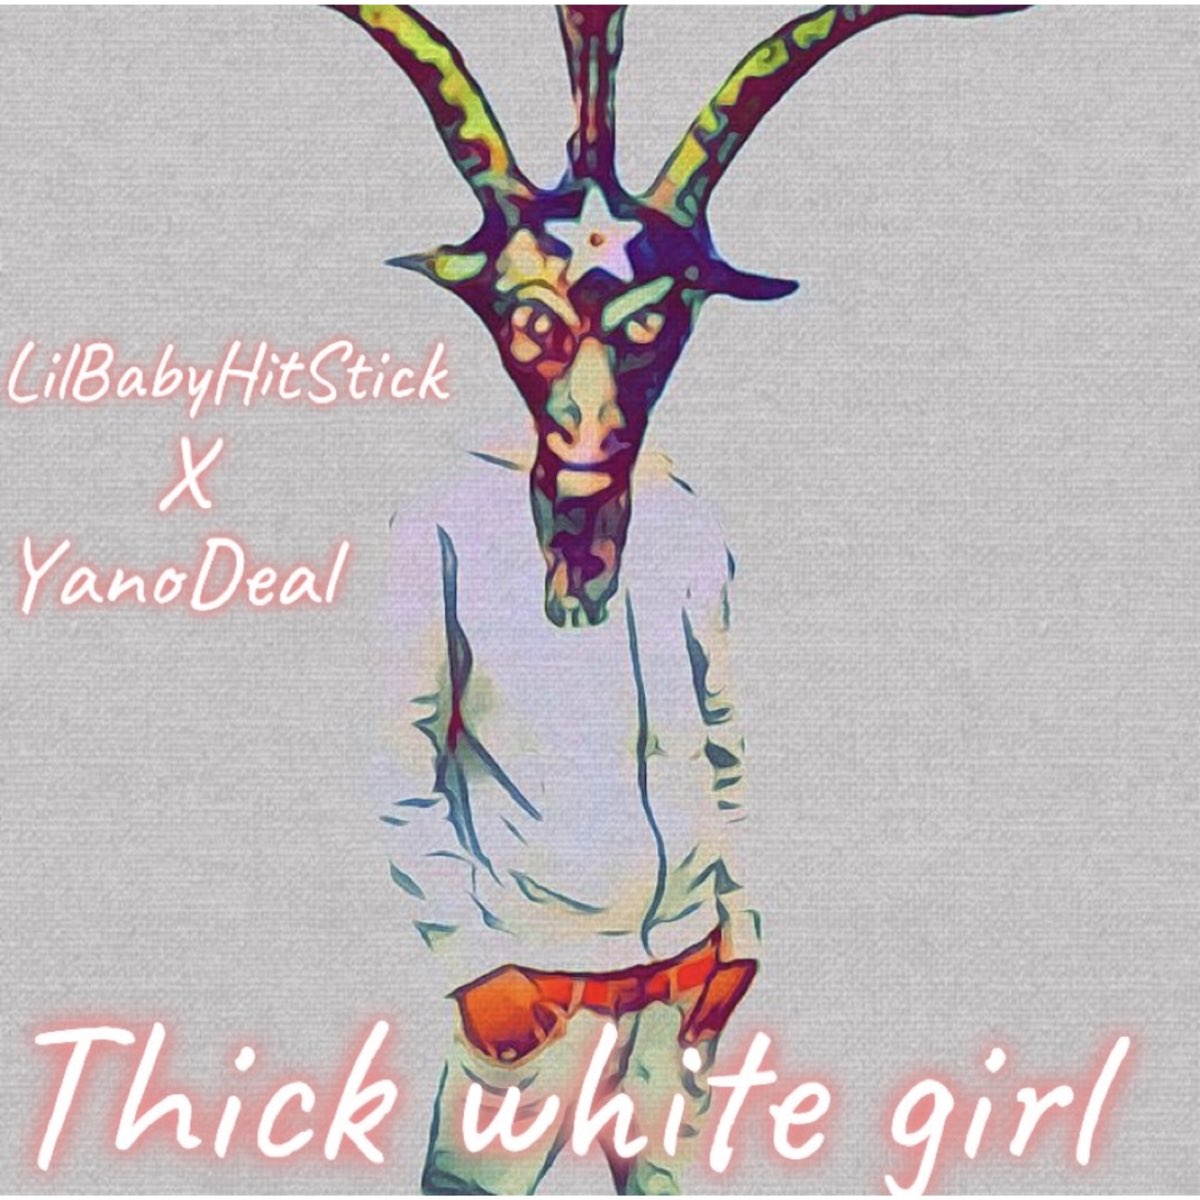 nice thick white girl